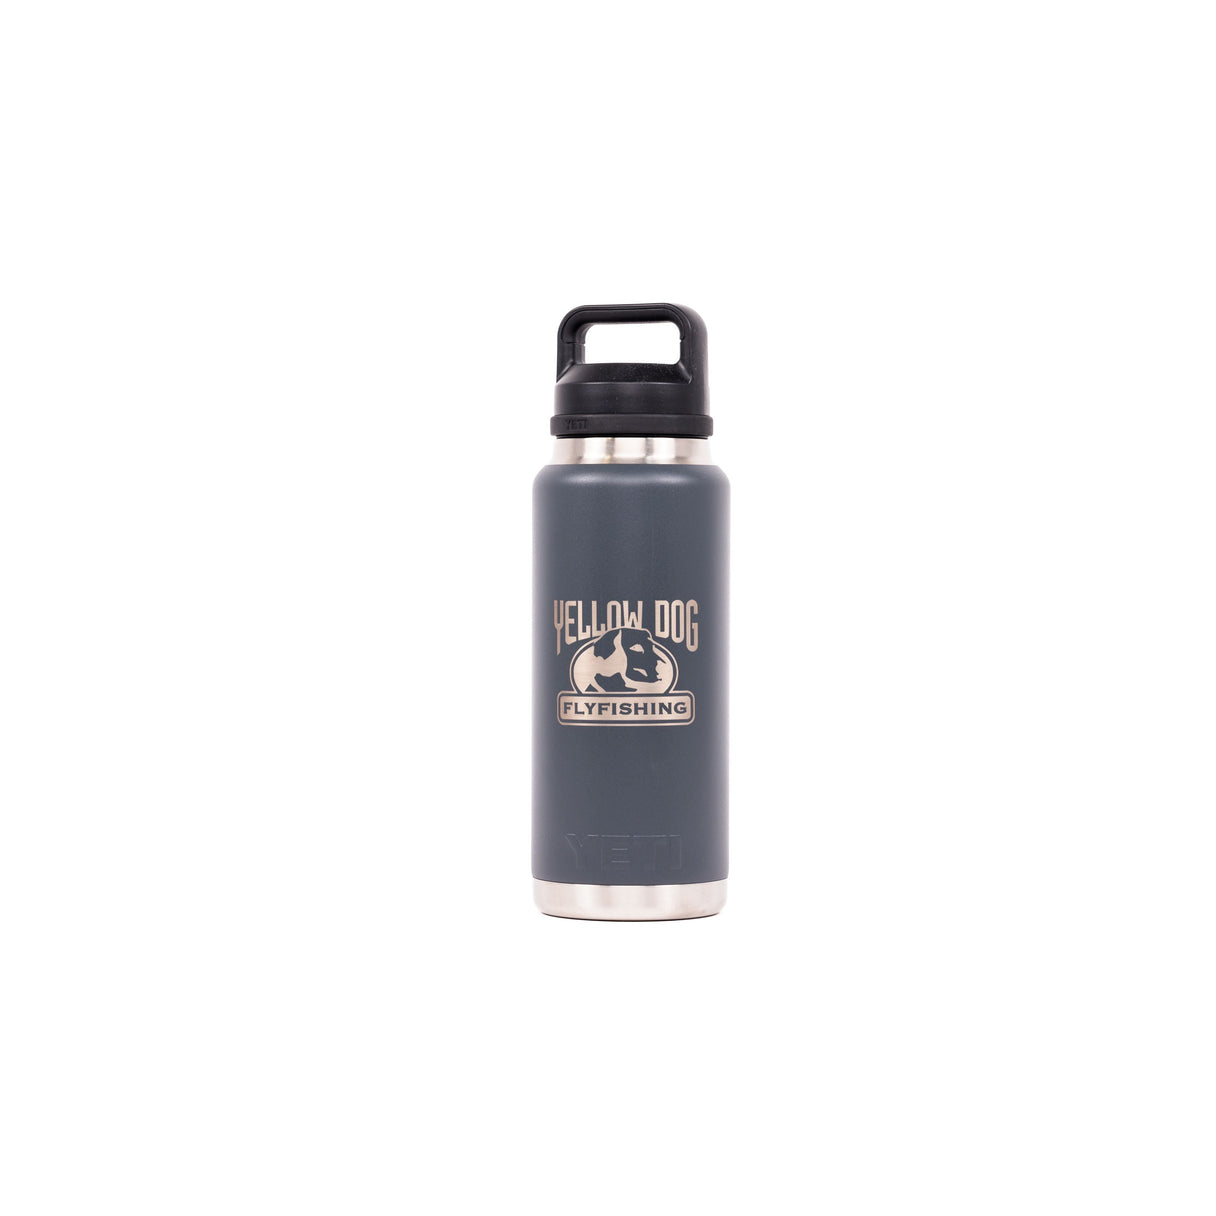 Yeti - 36 oz Rambler Bottle with Chug Cap Black